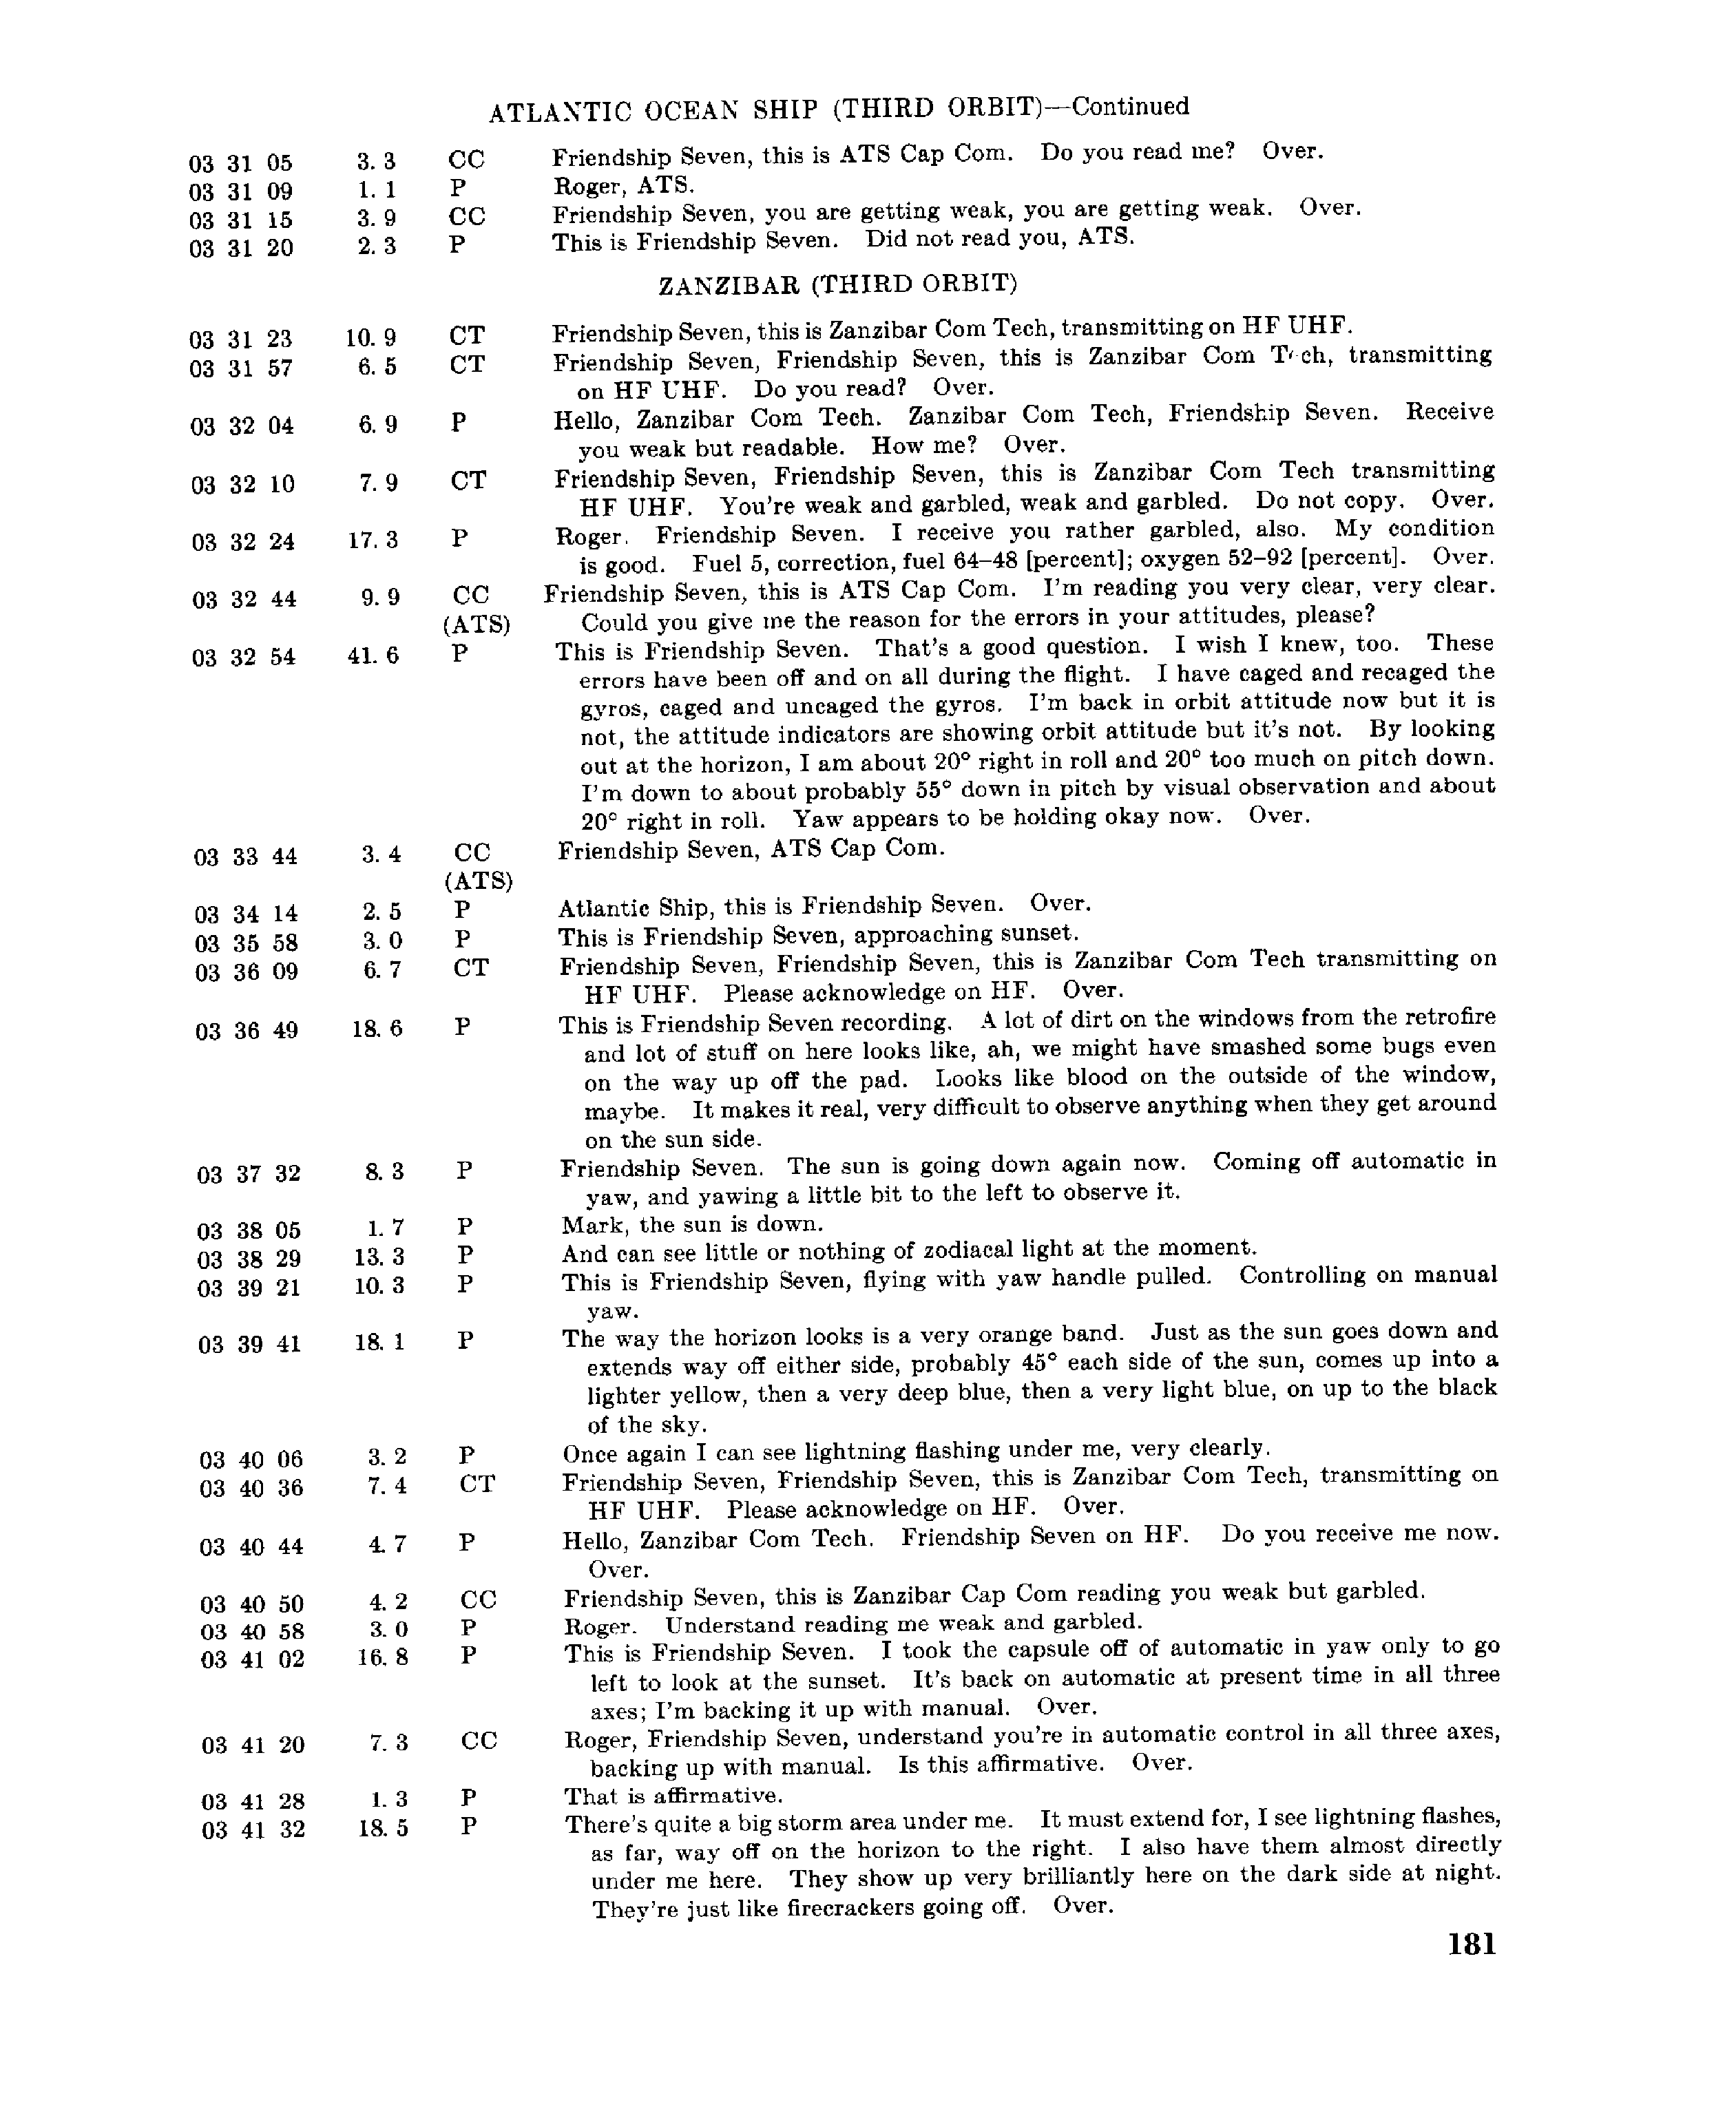 Page 180 of Mercury 6’s original transcript